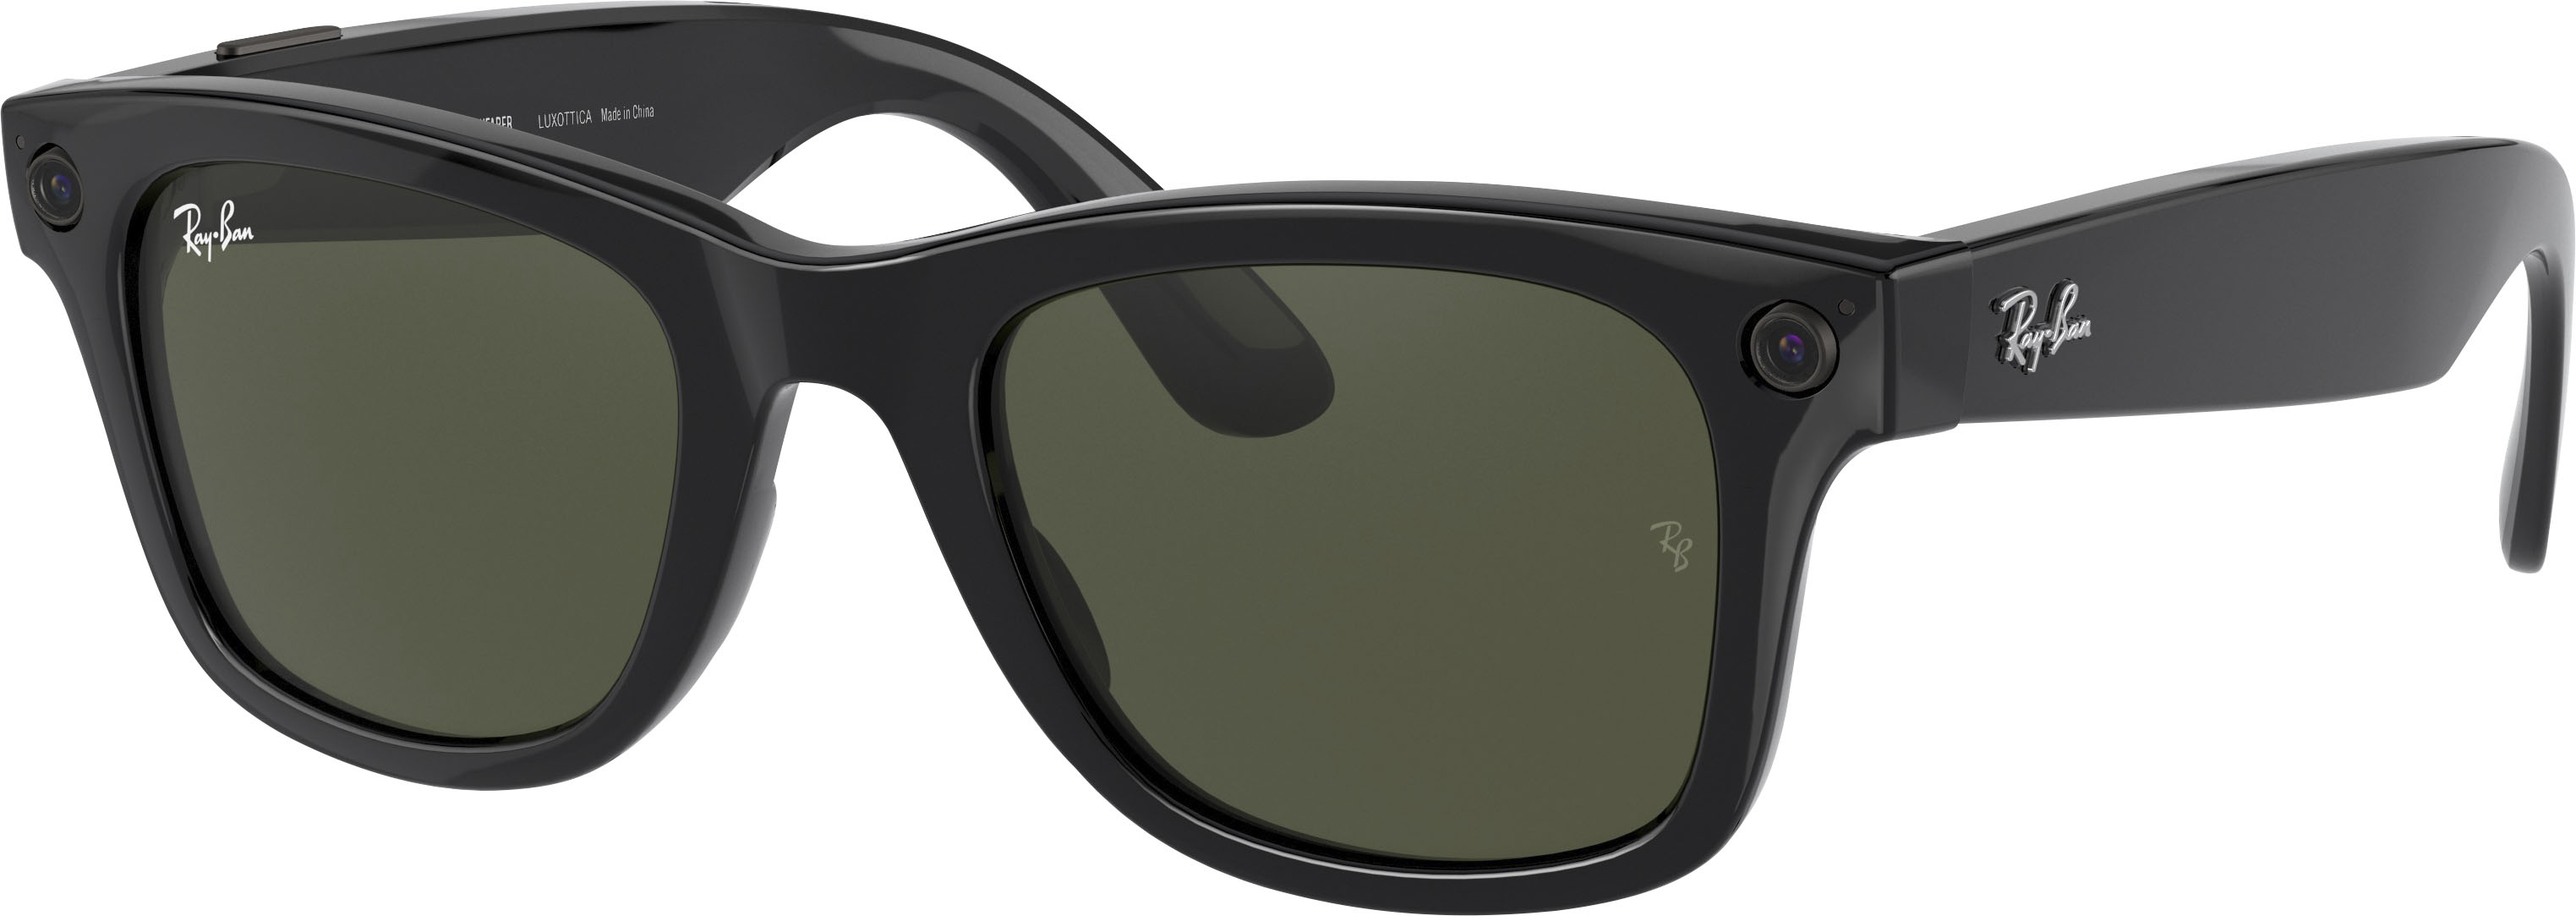 Resign Four tempo Ray-Ban Stories Wayfarer Smart Glasses 50mm Shiny Black/Green  0RW4002601/7150 - Best Buy